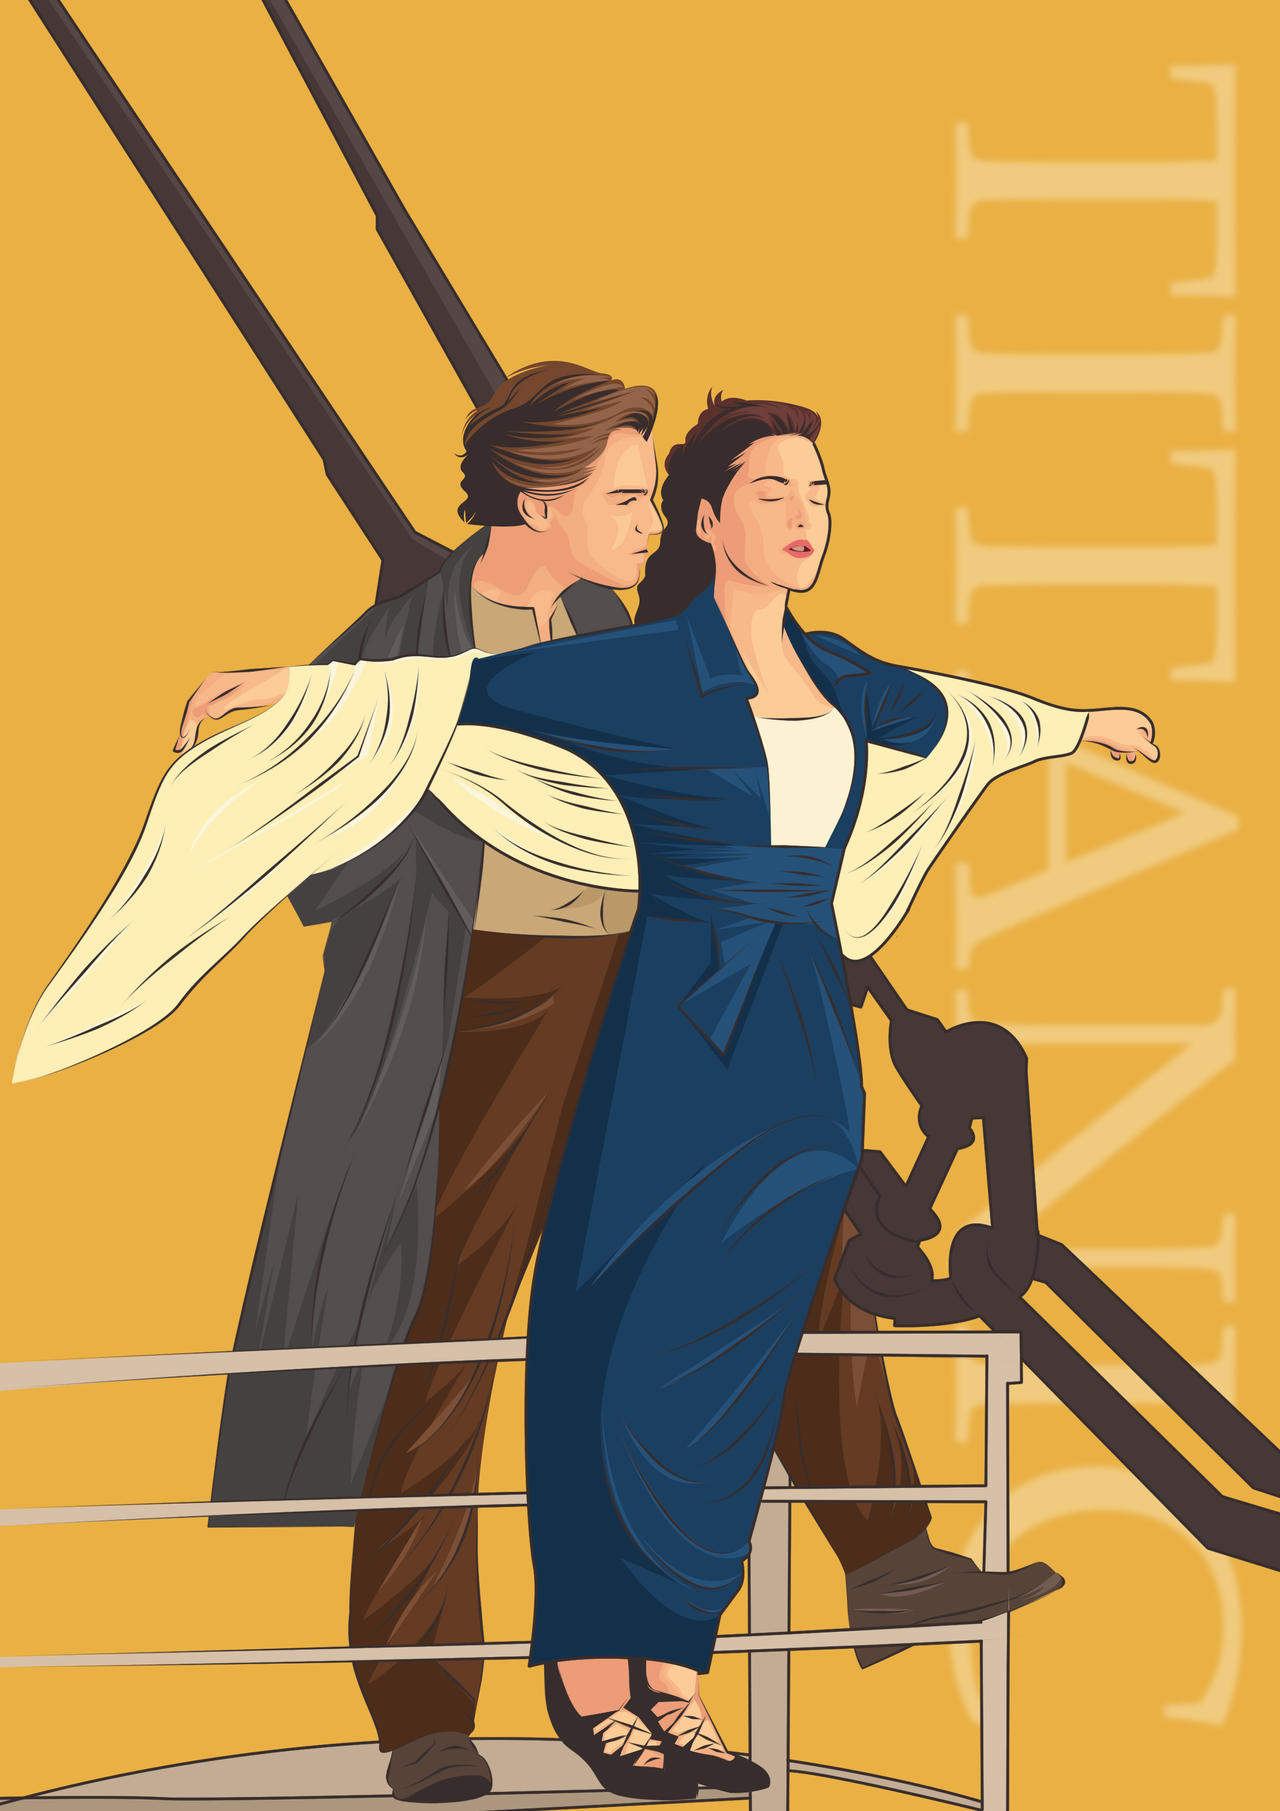 Movie scenes Titanic - I'm Flying by stratorkick on DeviantArt